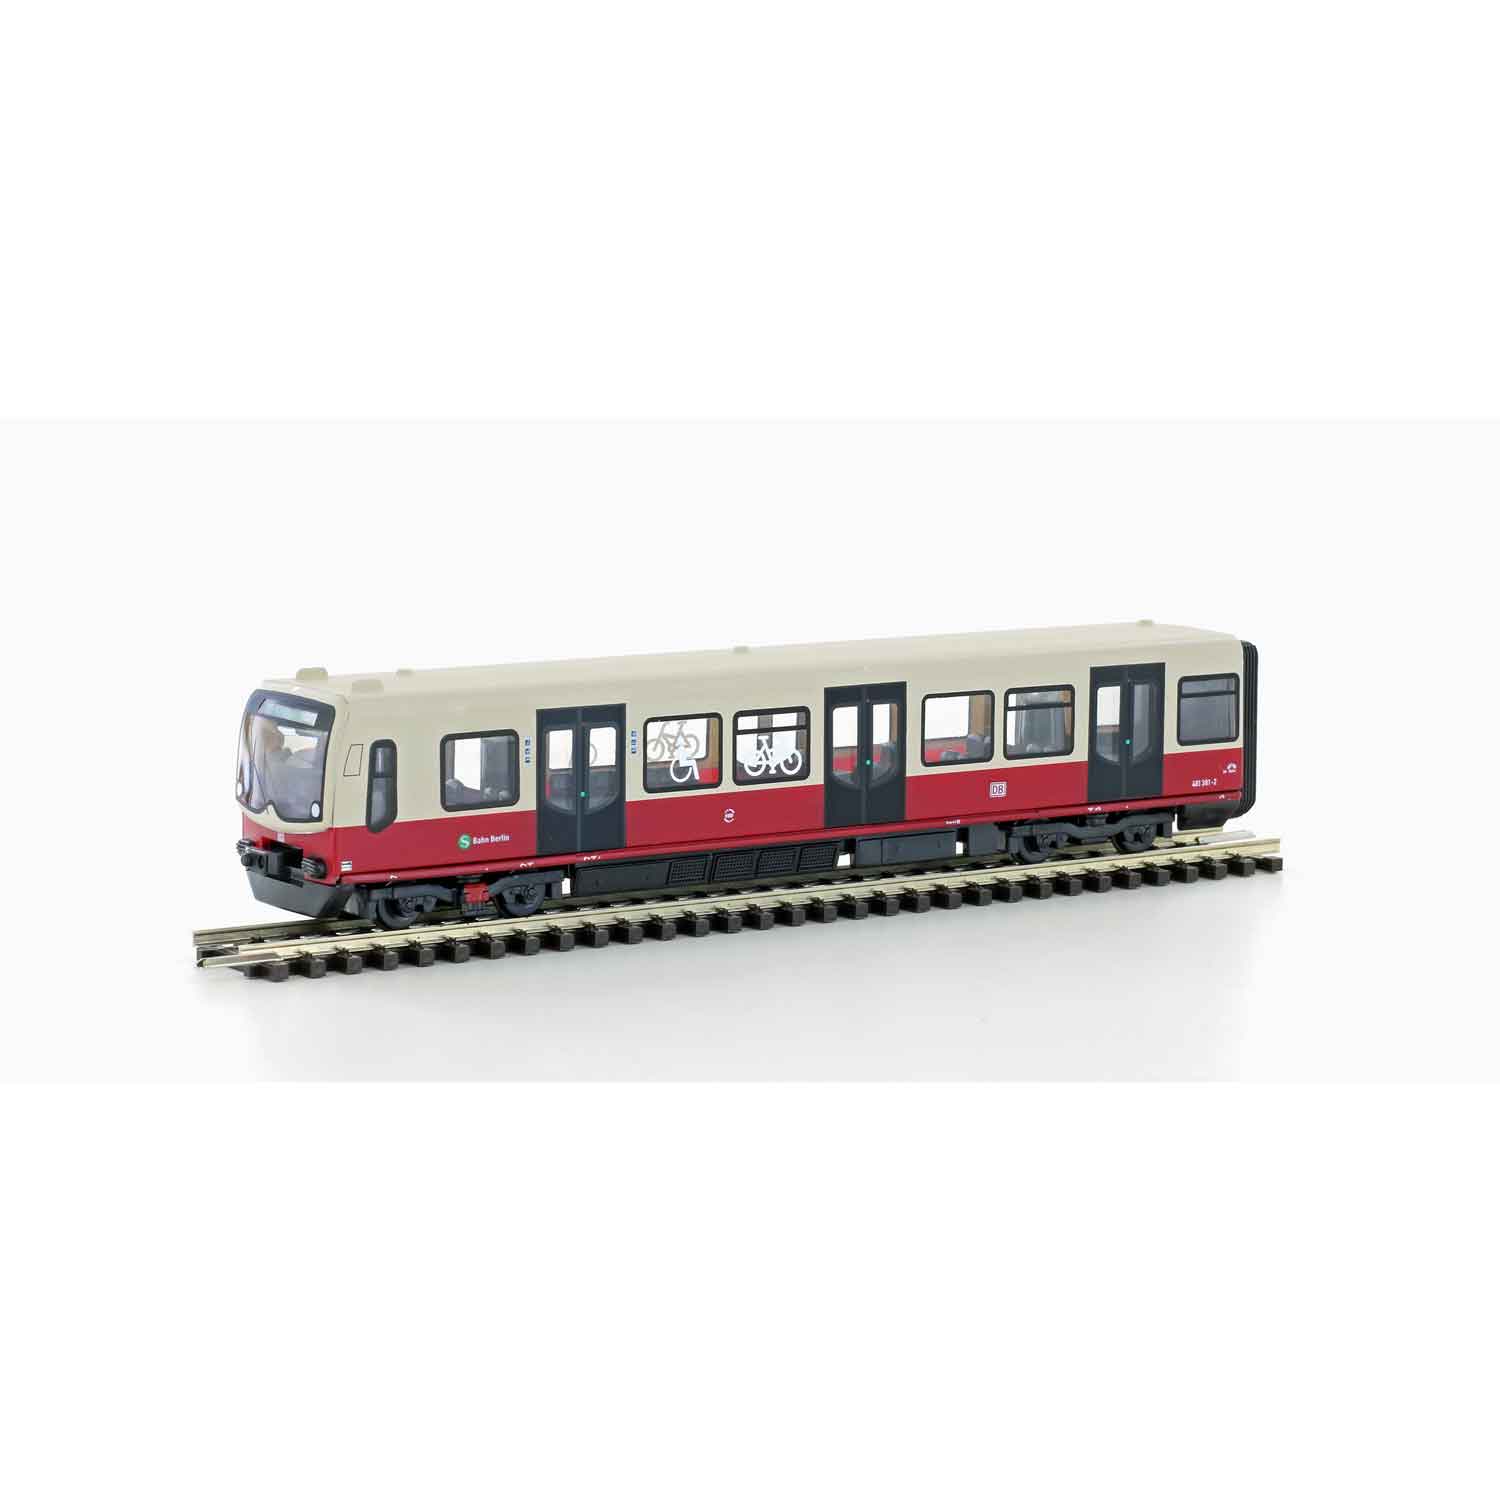 Miniatur S-Bahn Berlin 1:120 BR481 (creme-rot)